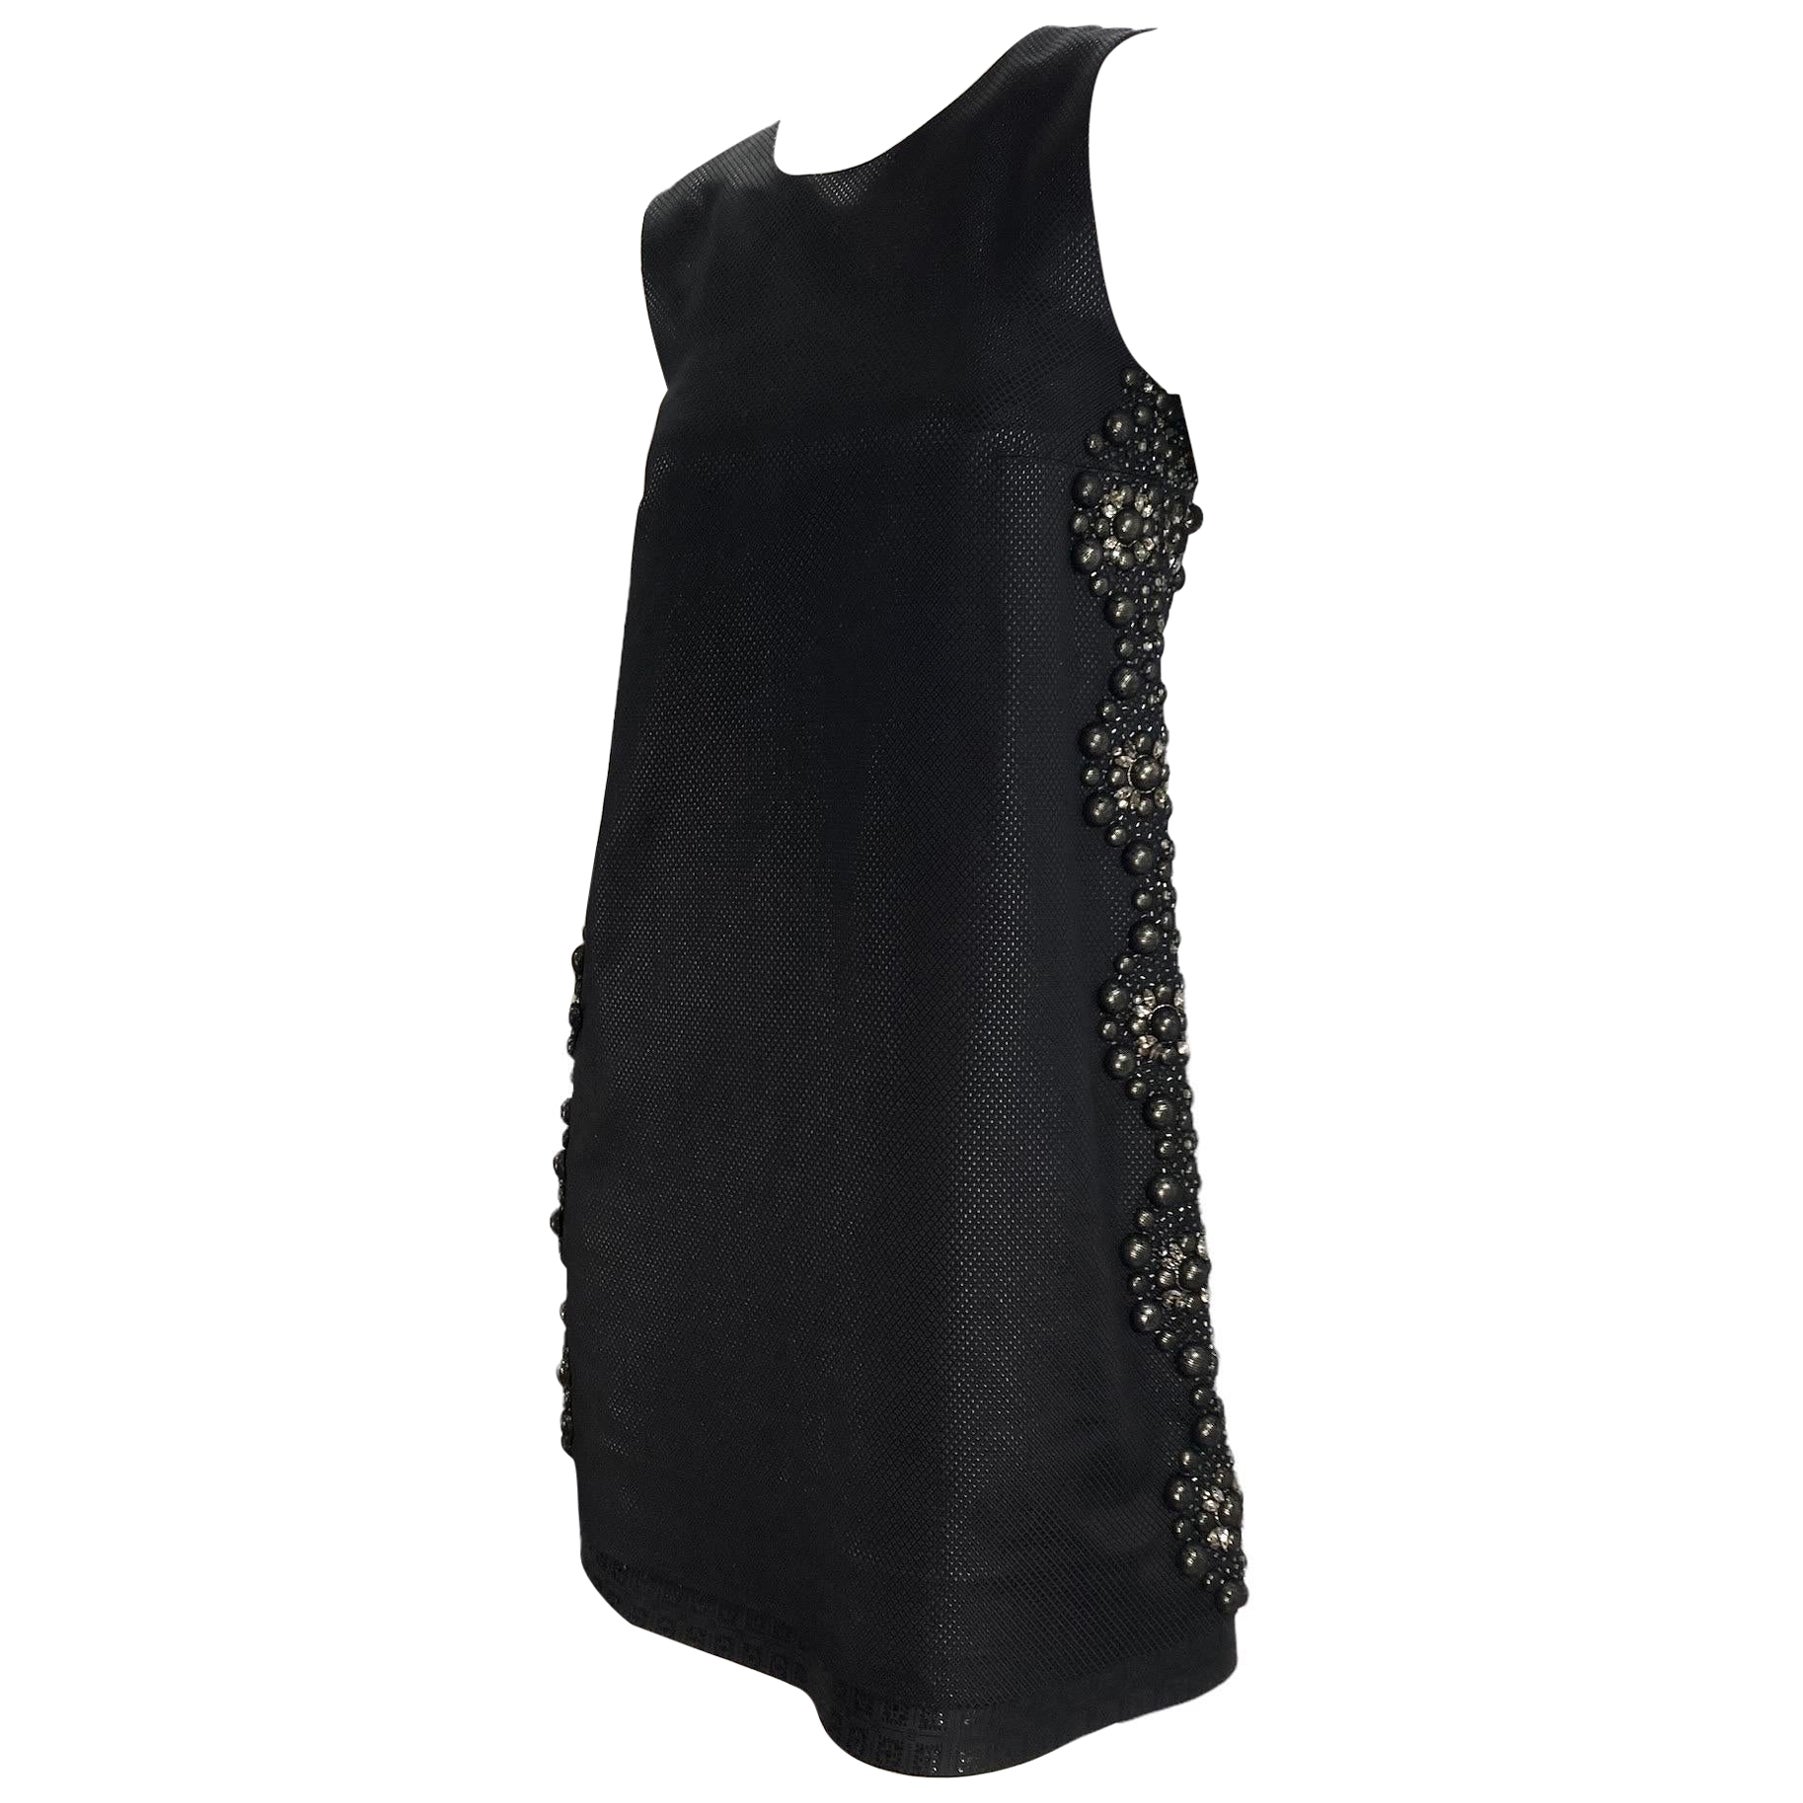  Gucci 2006 Vintage Studded and Crystal Embellished Black Dress Italian Size 38 For Sale